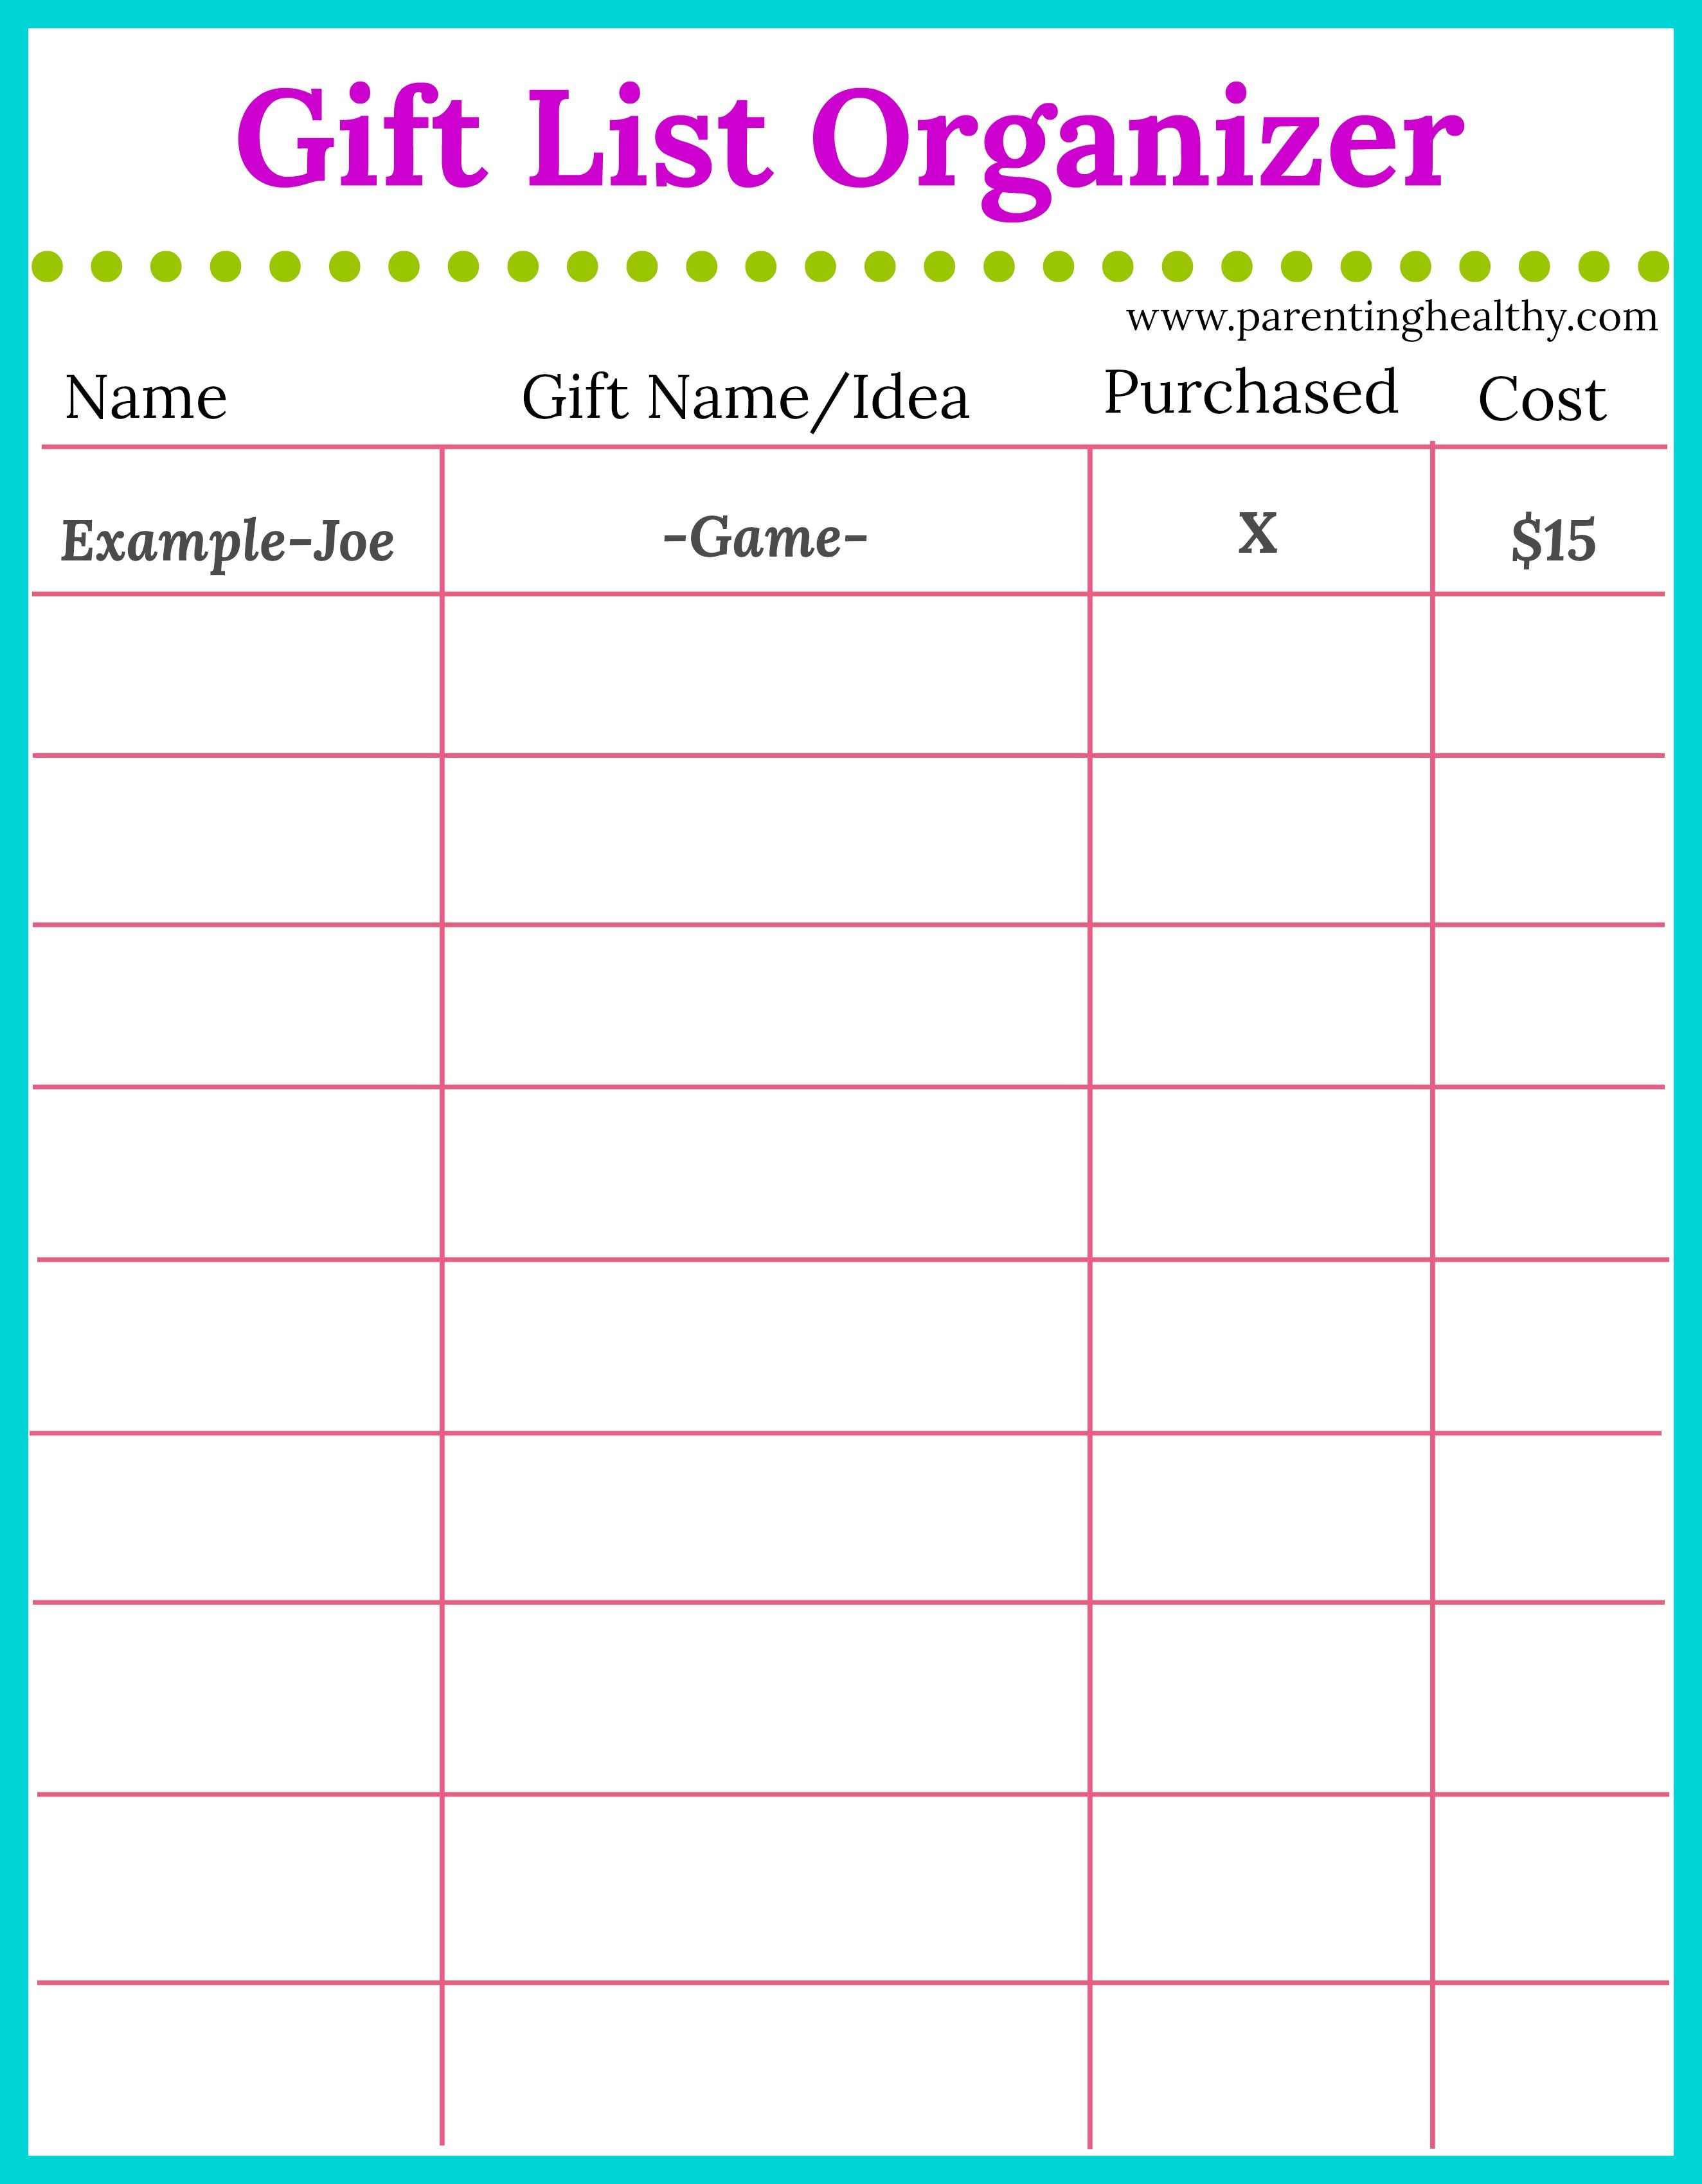 Gift List Organizer - Free Printable For Shopping Smart | Free - Free Printable Gift List